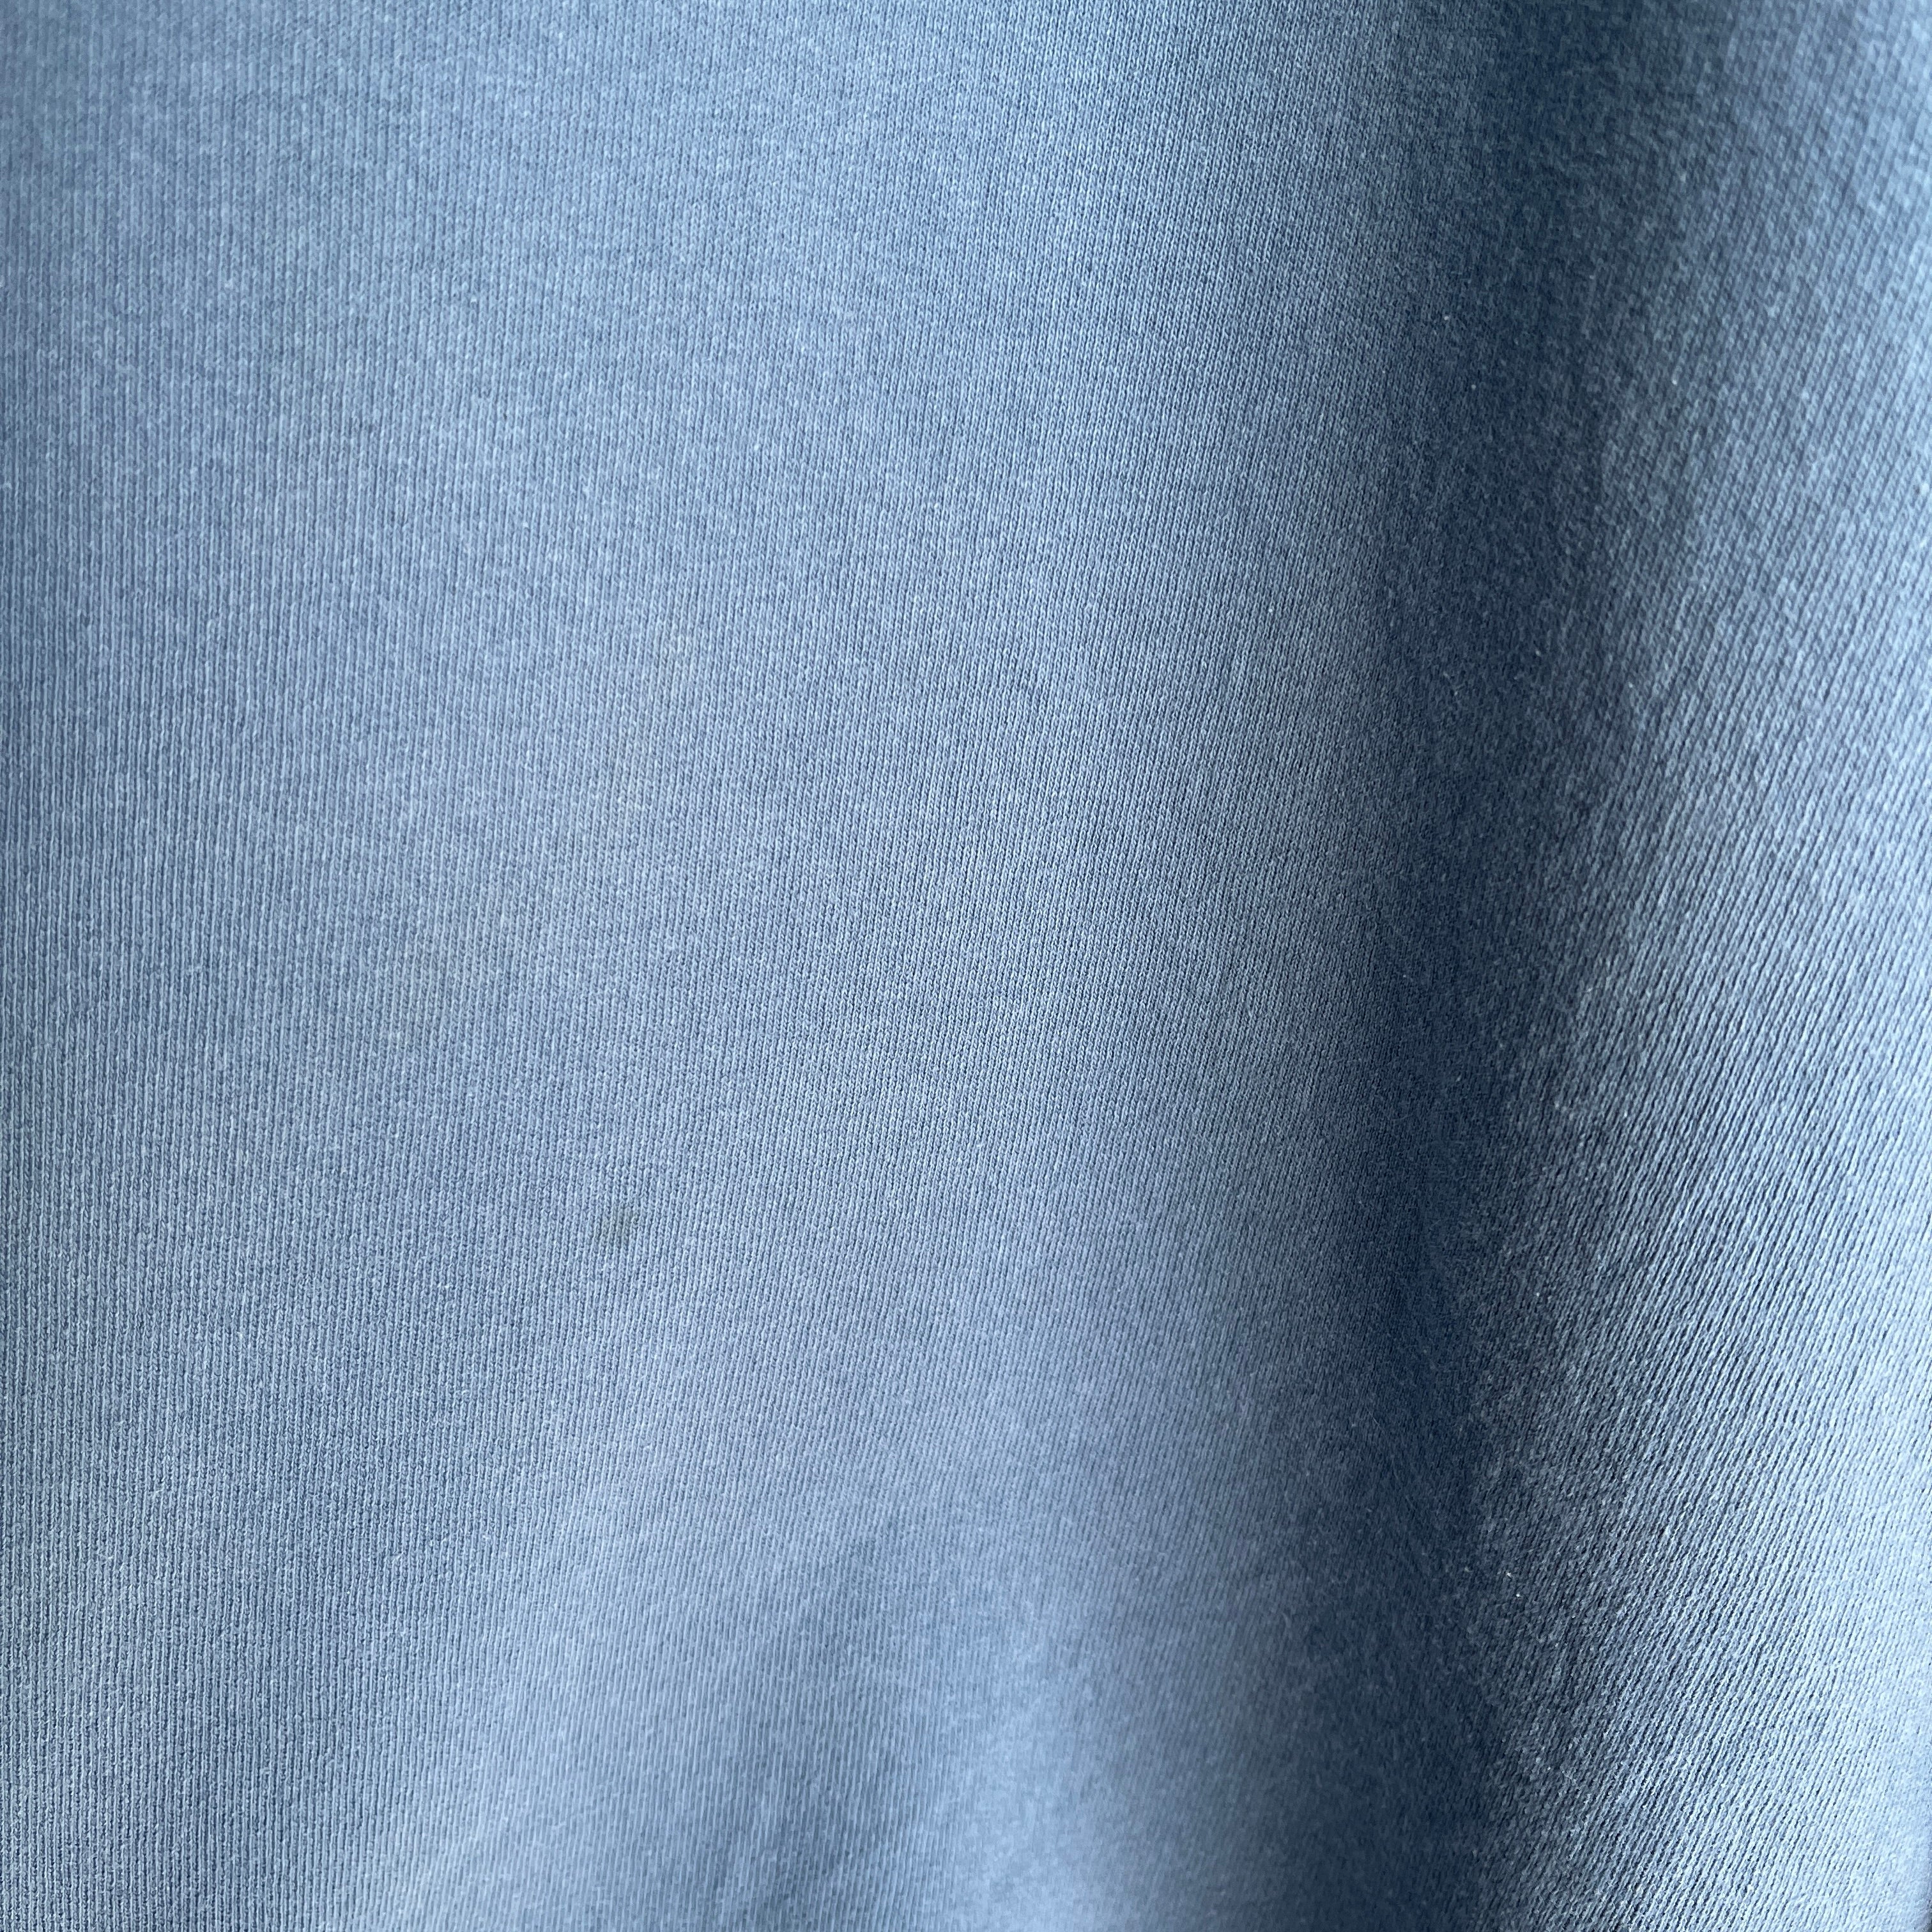 1990s Starter Brand Heavyweight Stone Blue Gray Sweatshirt